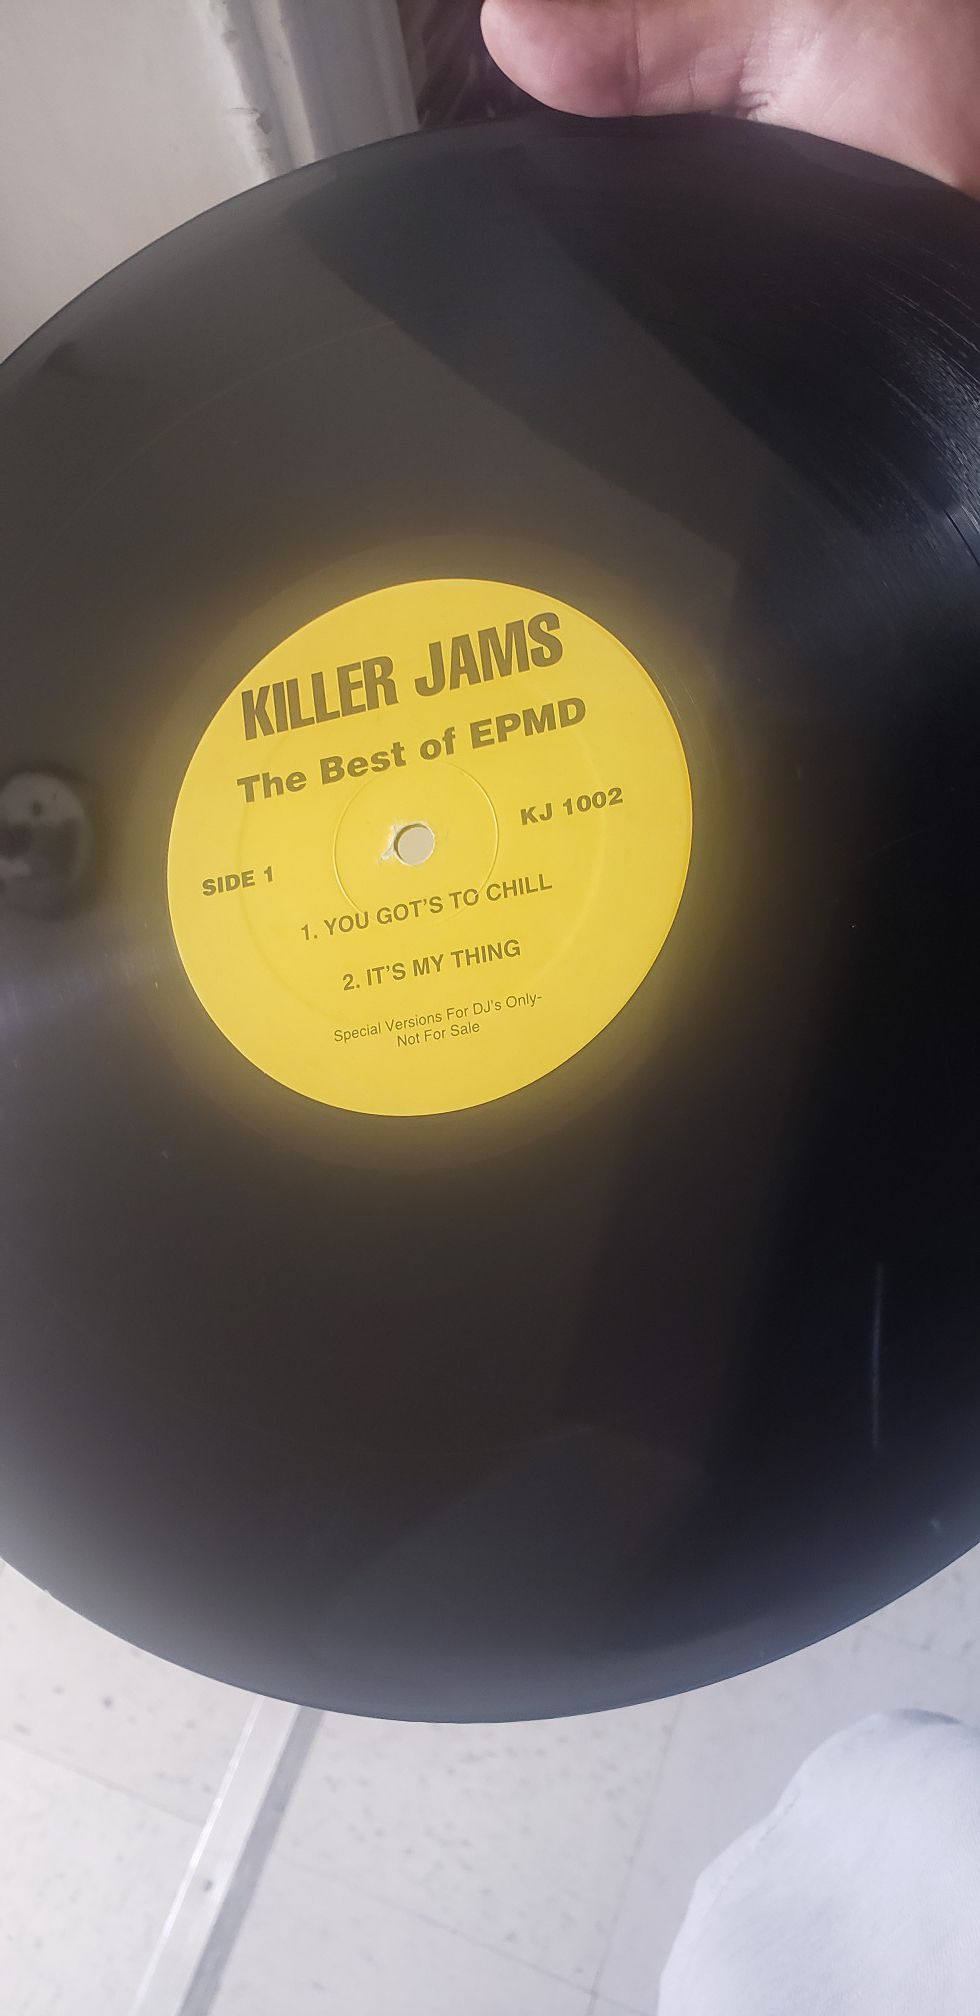 The best of EPMD vinyl record